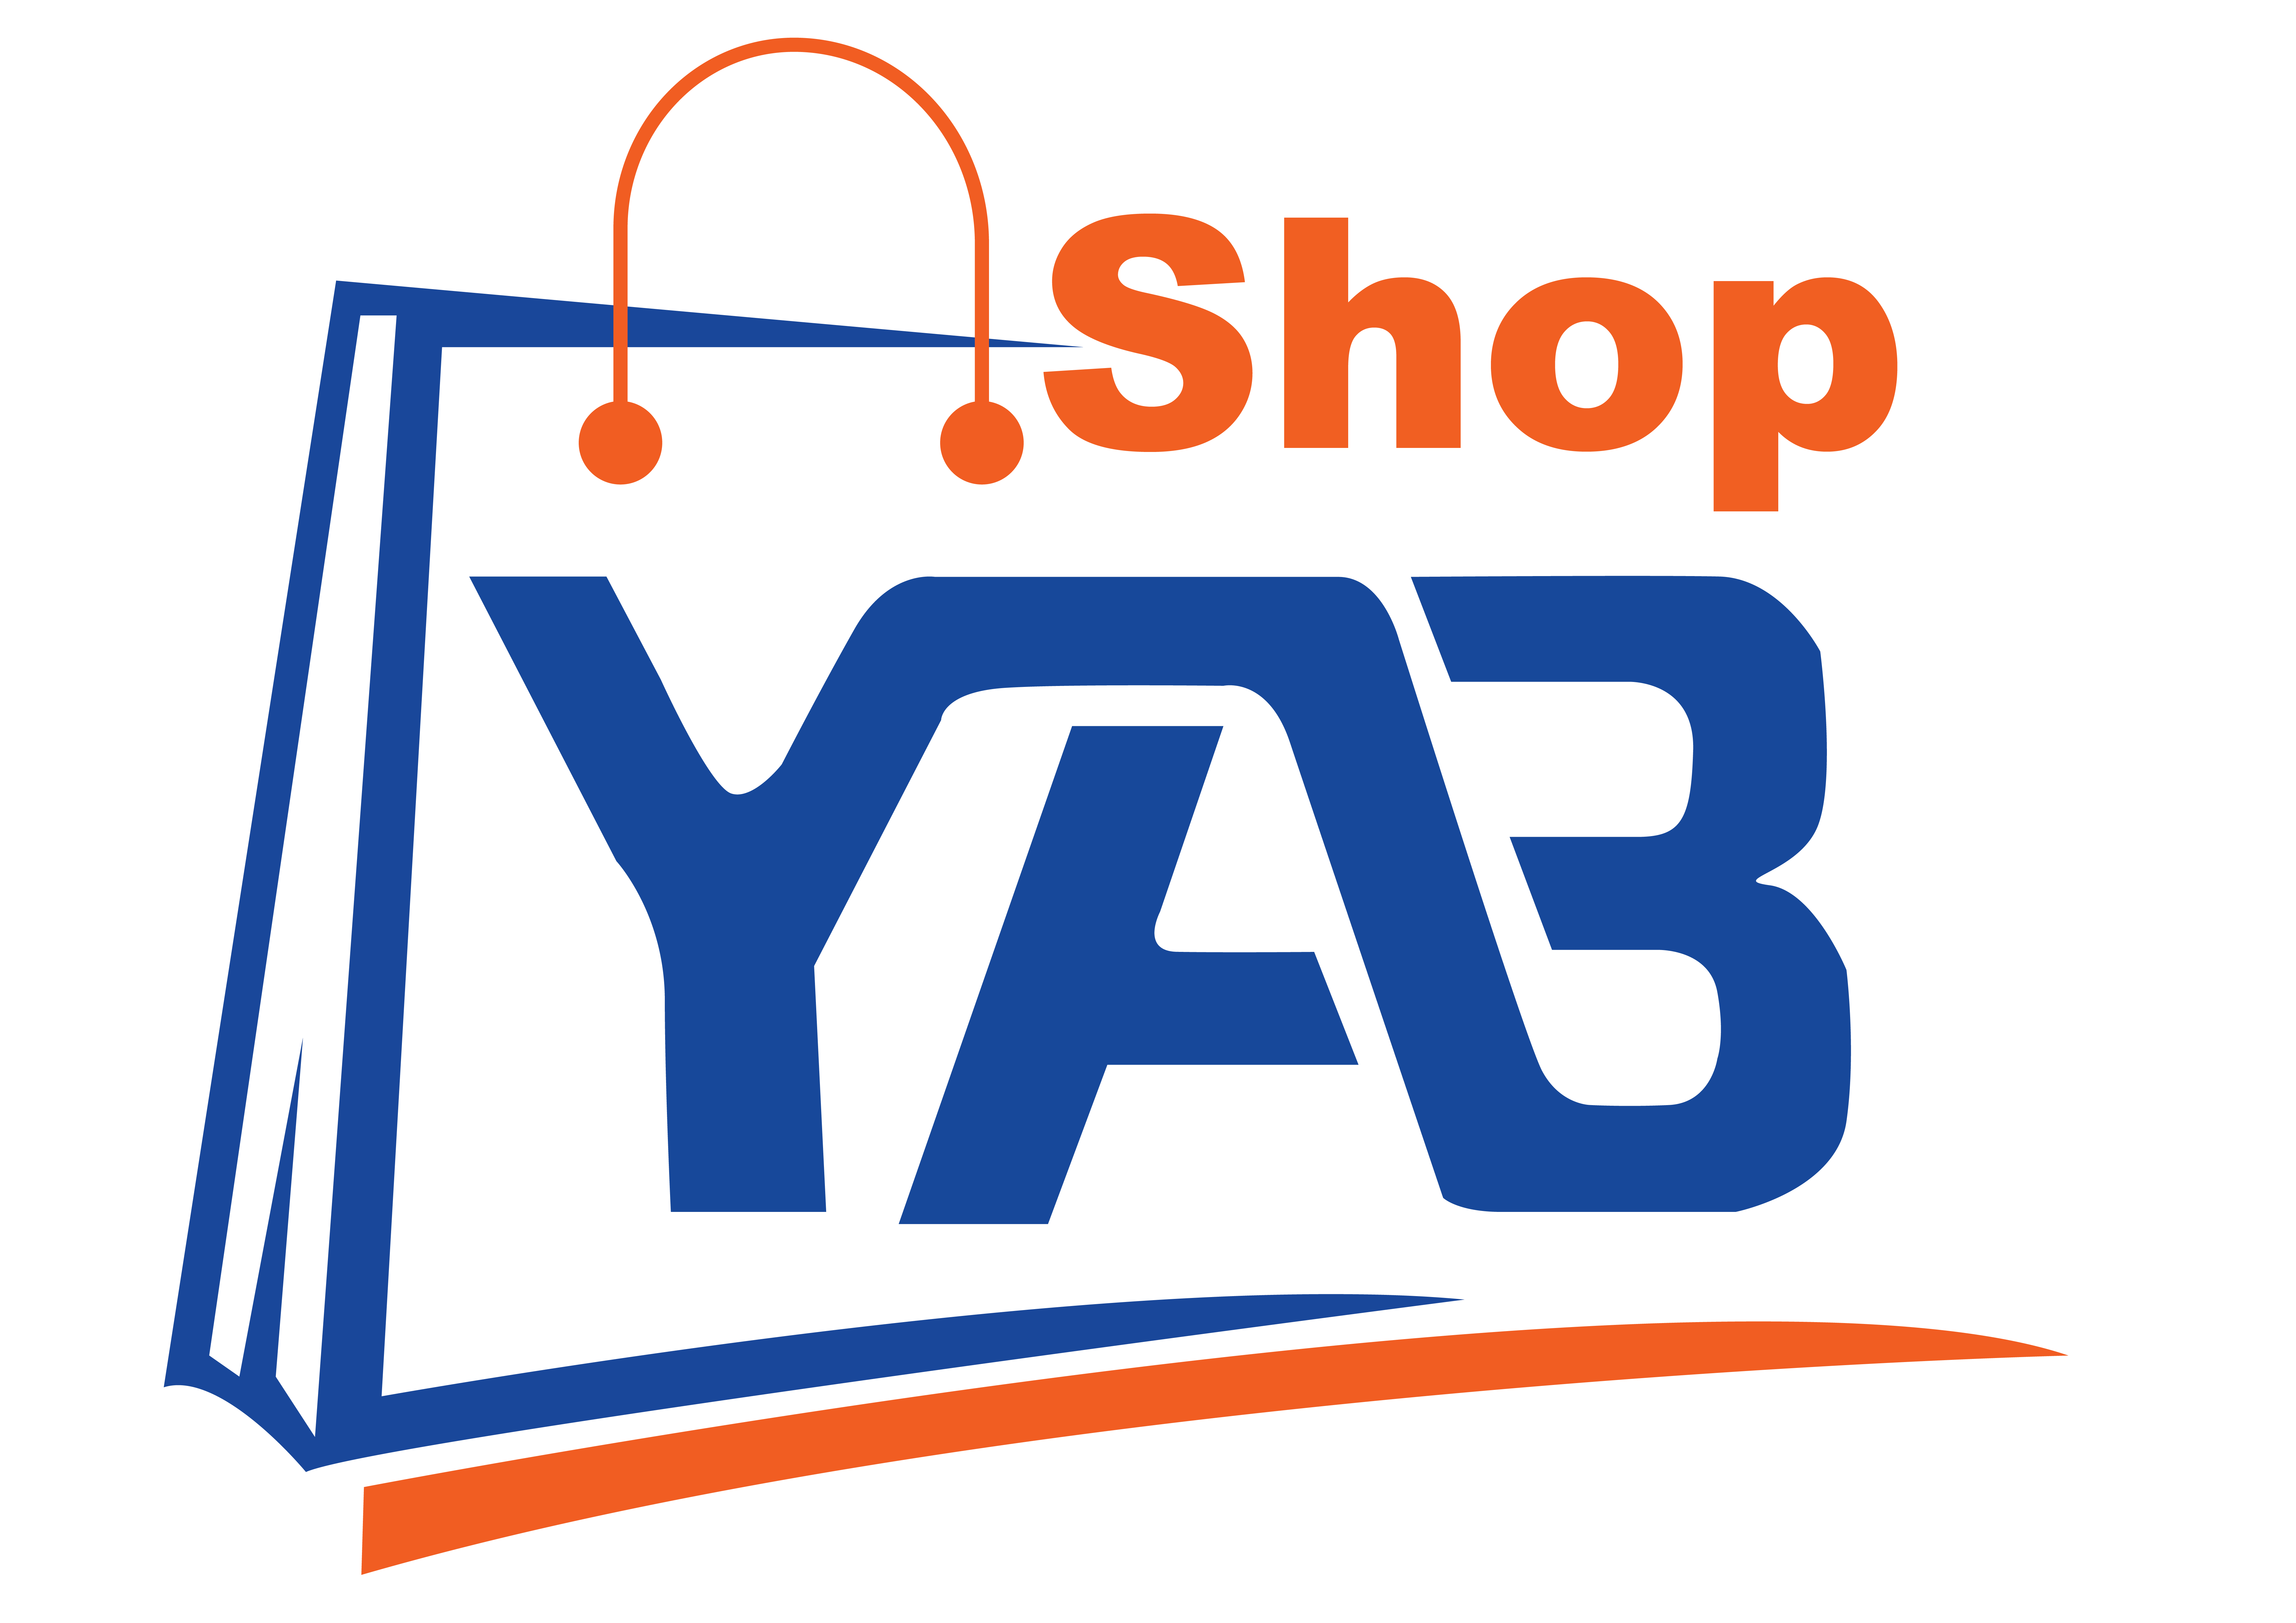 181yab Store